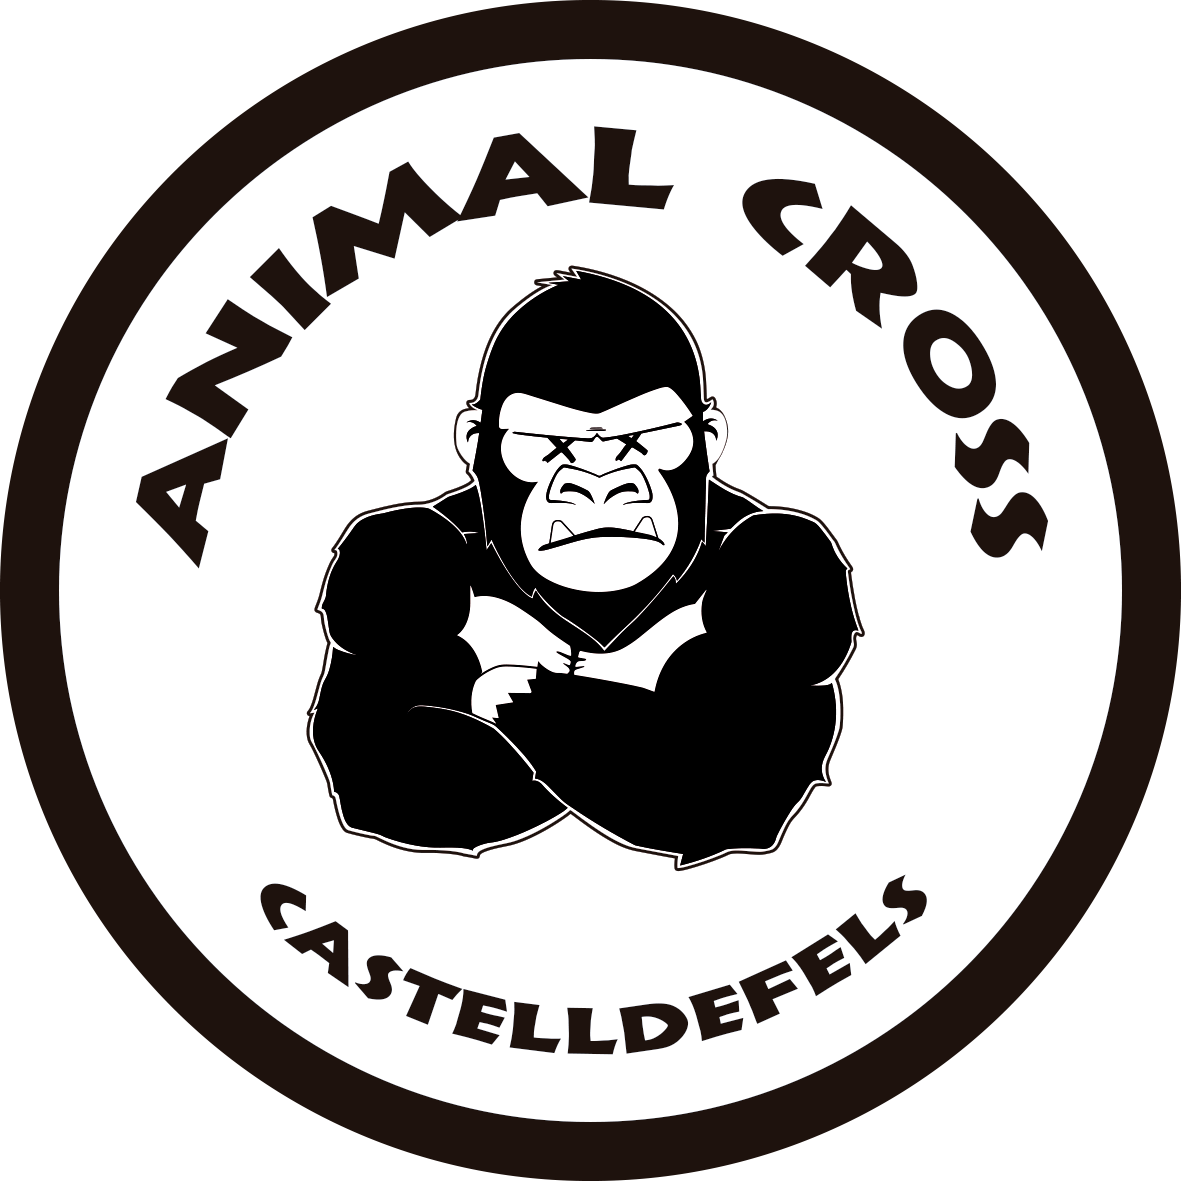 Animal Cross Castelldefels